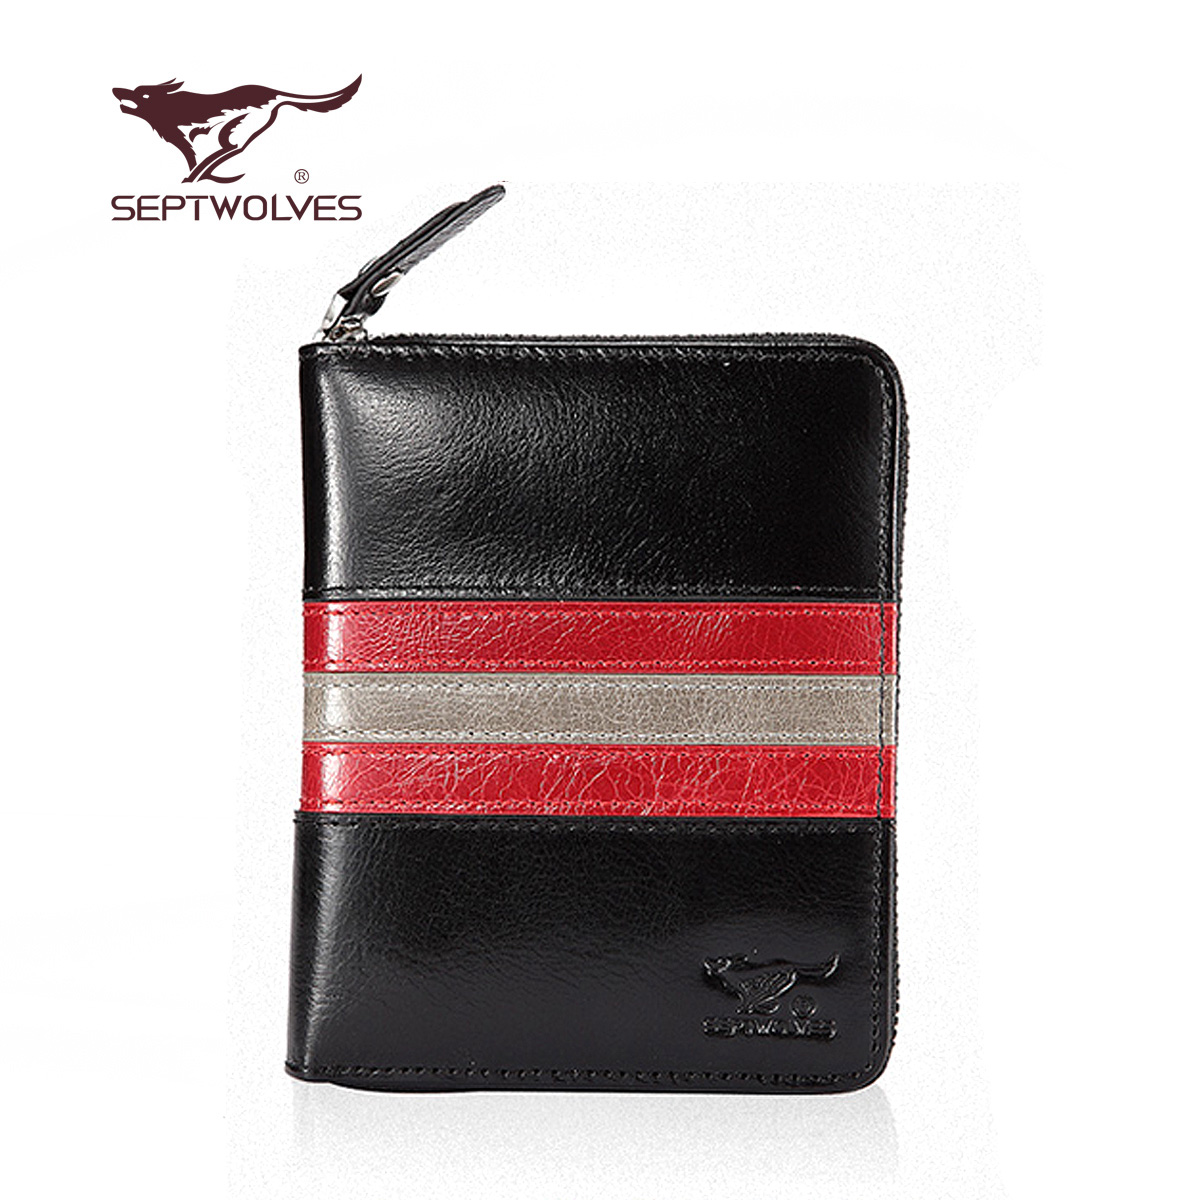 fashion men Septwolves     casual    zipper belt    genuine leather wallets brand male wallet purse men